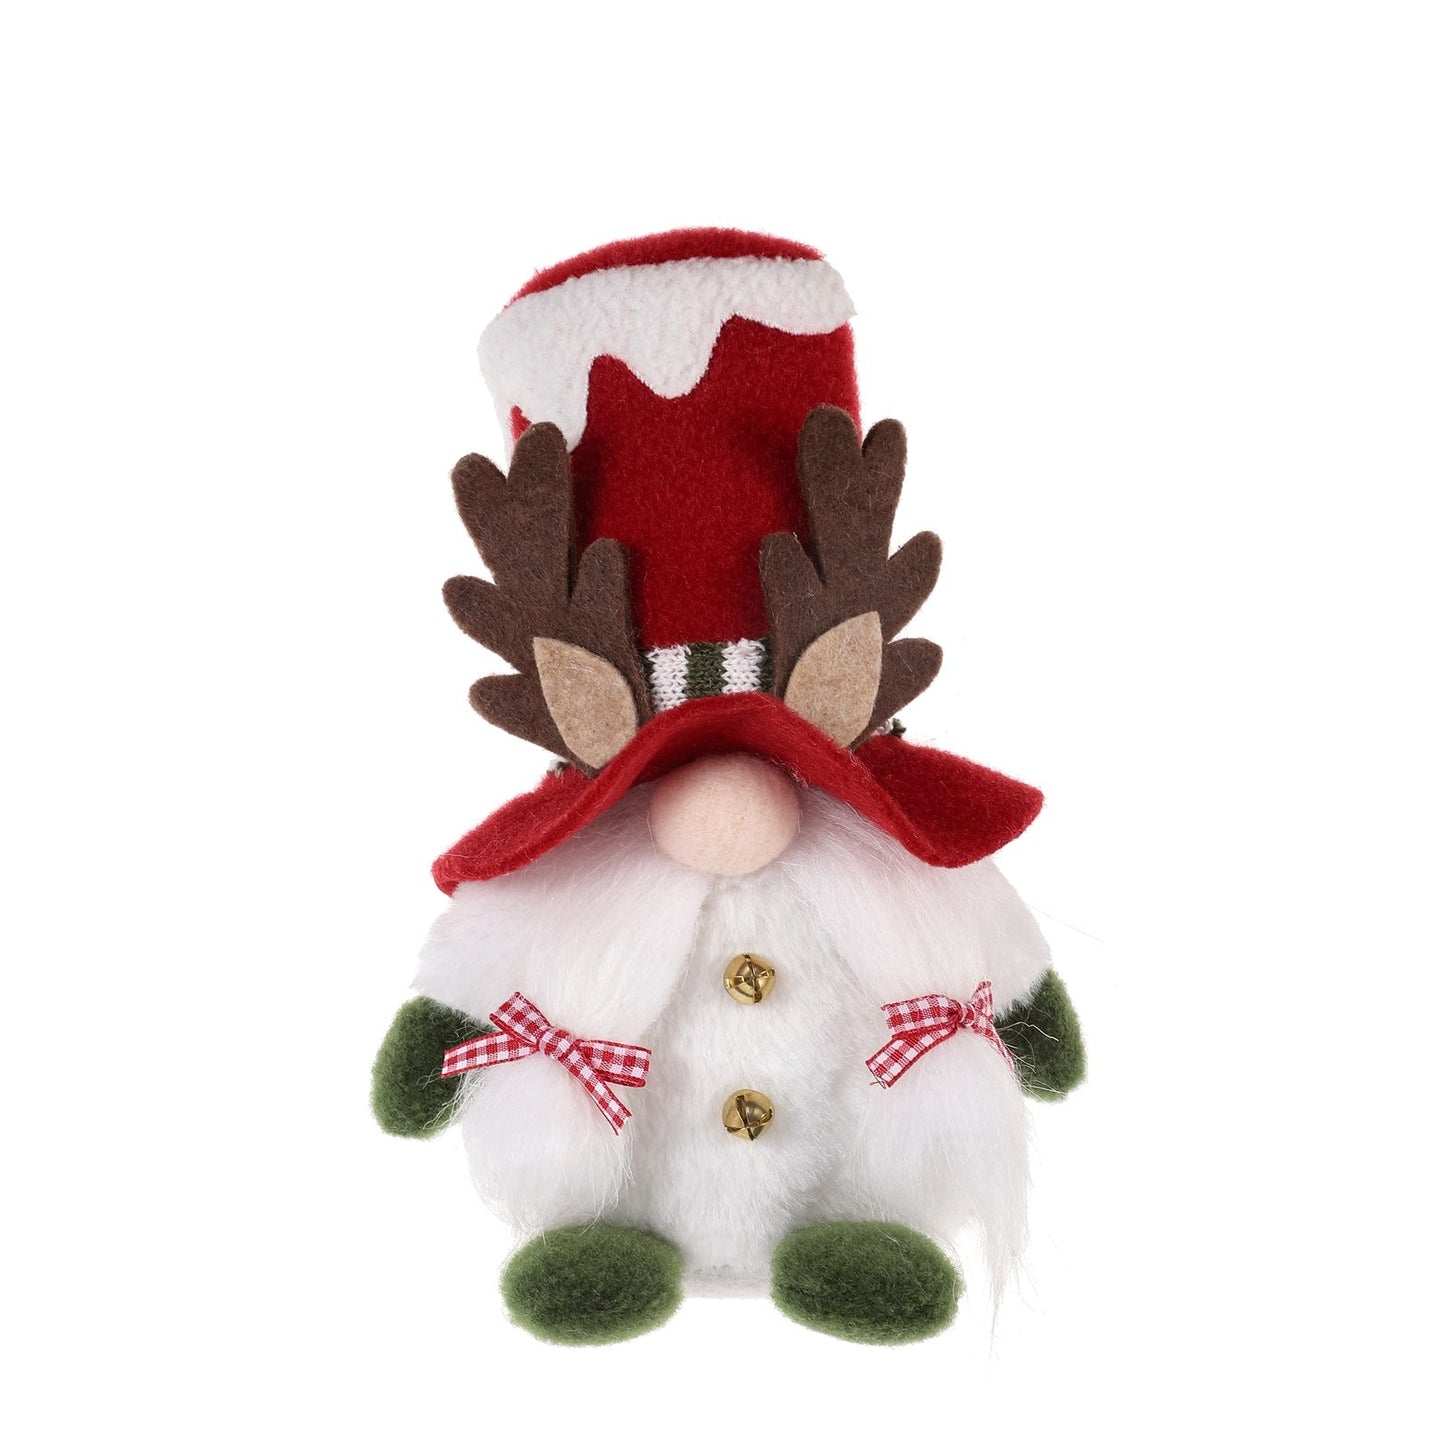 Faceless Dwarf Rudolph Plush Doll Christmas Decorations - TOY-PLU-38902 - YWSYMC - 42shops